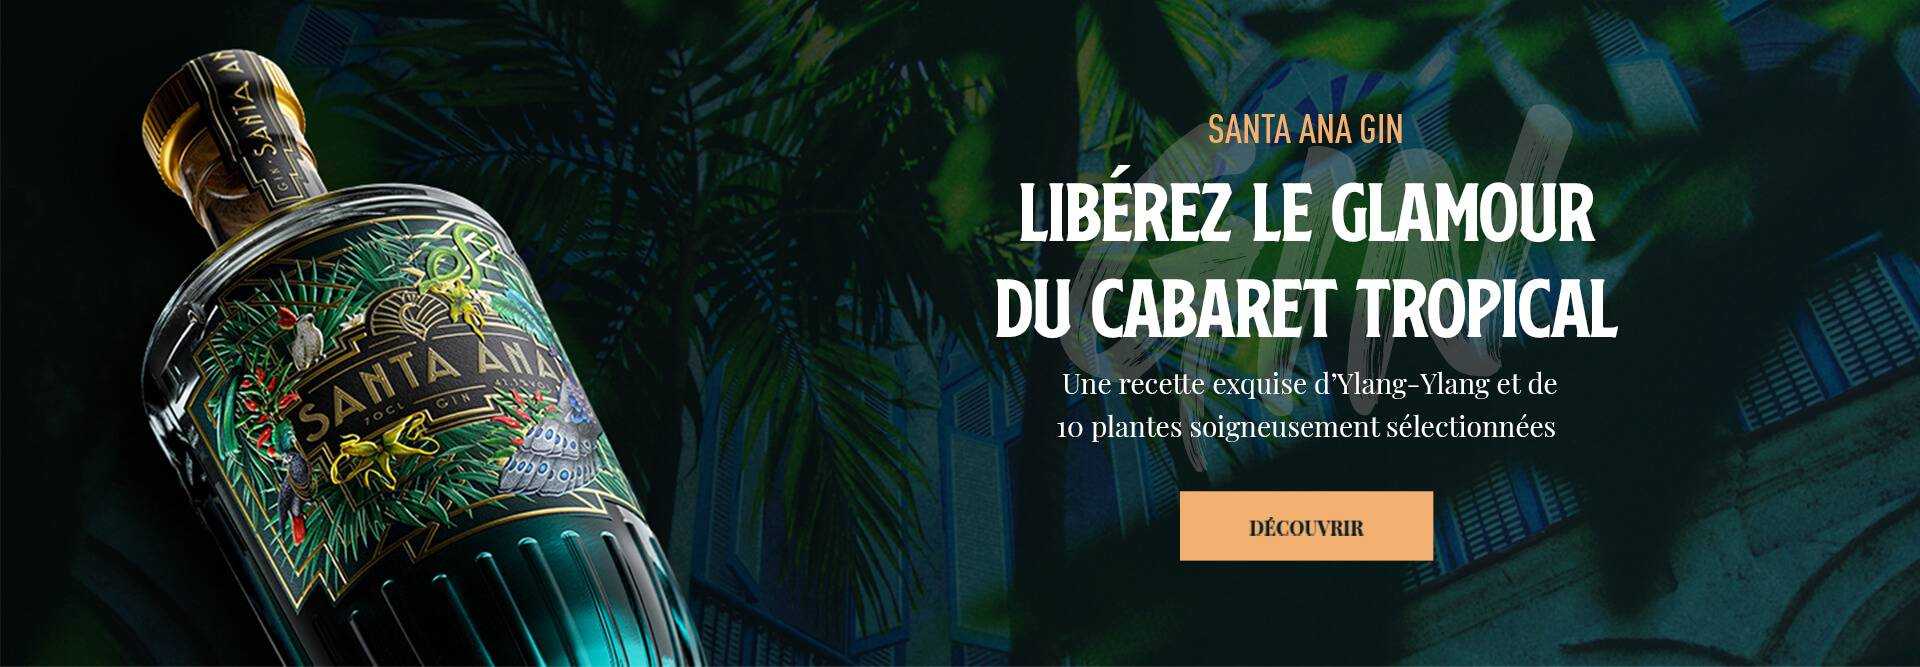 Santa Ana Gin - Libérez le glamour du cabaret tropical